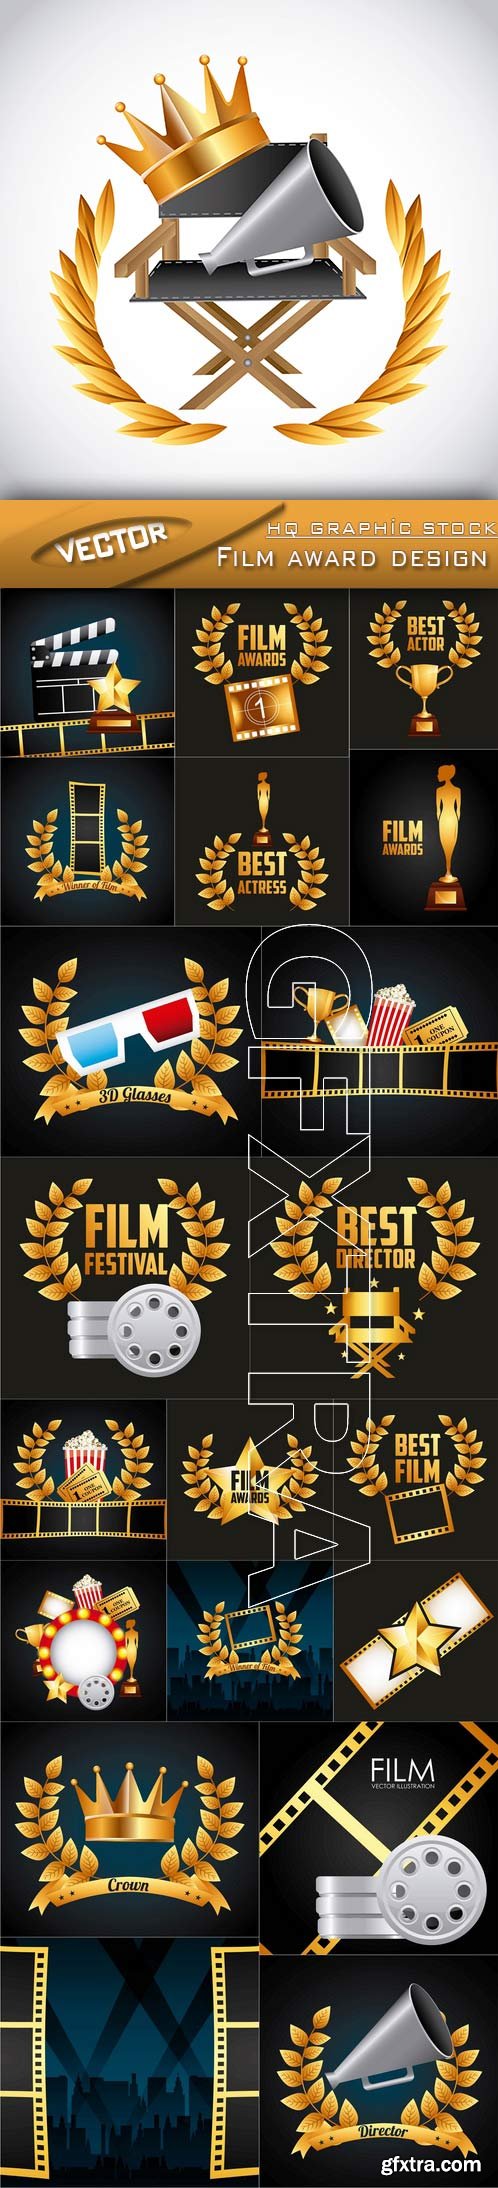 Stock Vector - Film award design